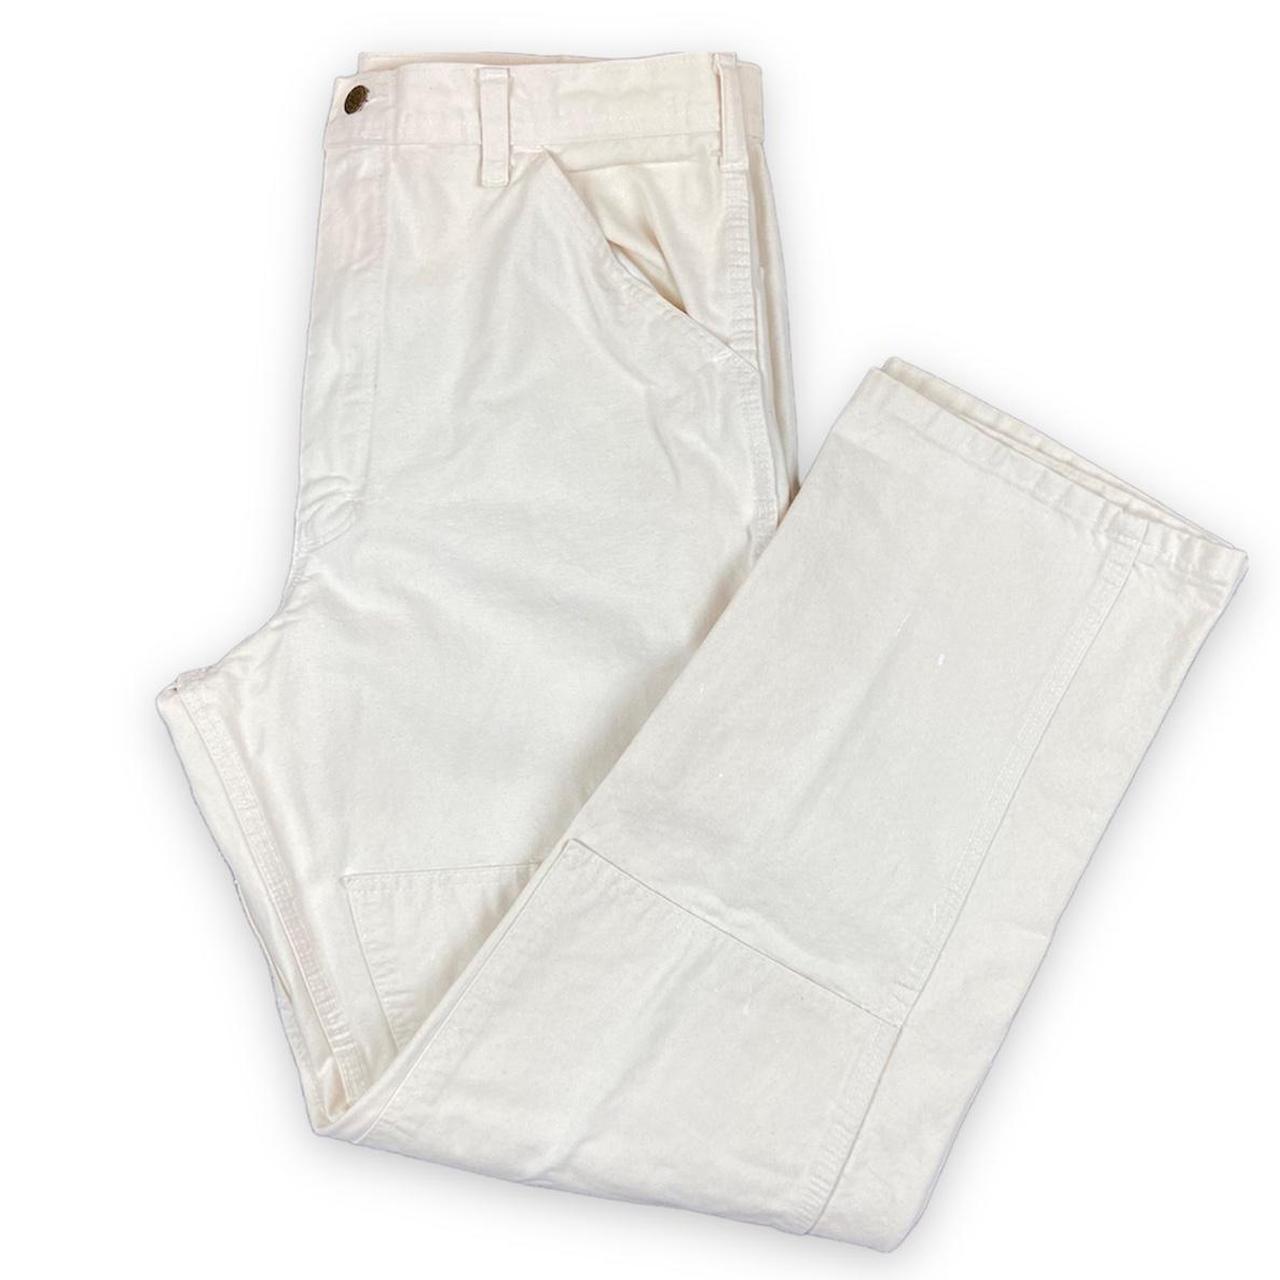 Product Image 4 - Vintage Double Knee Carpenter Pants

36"